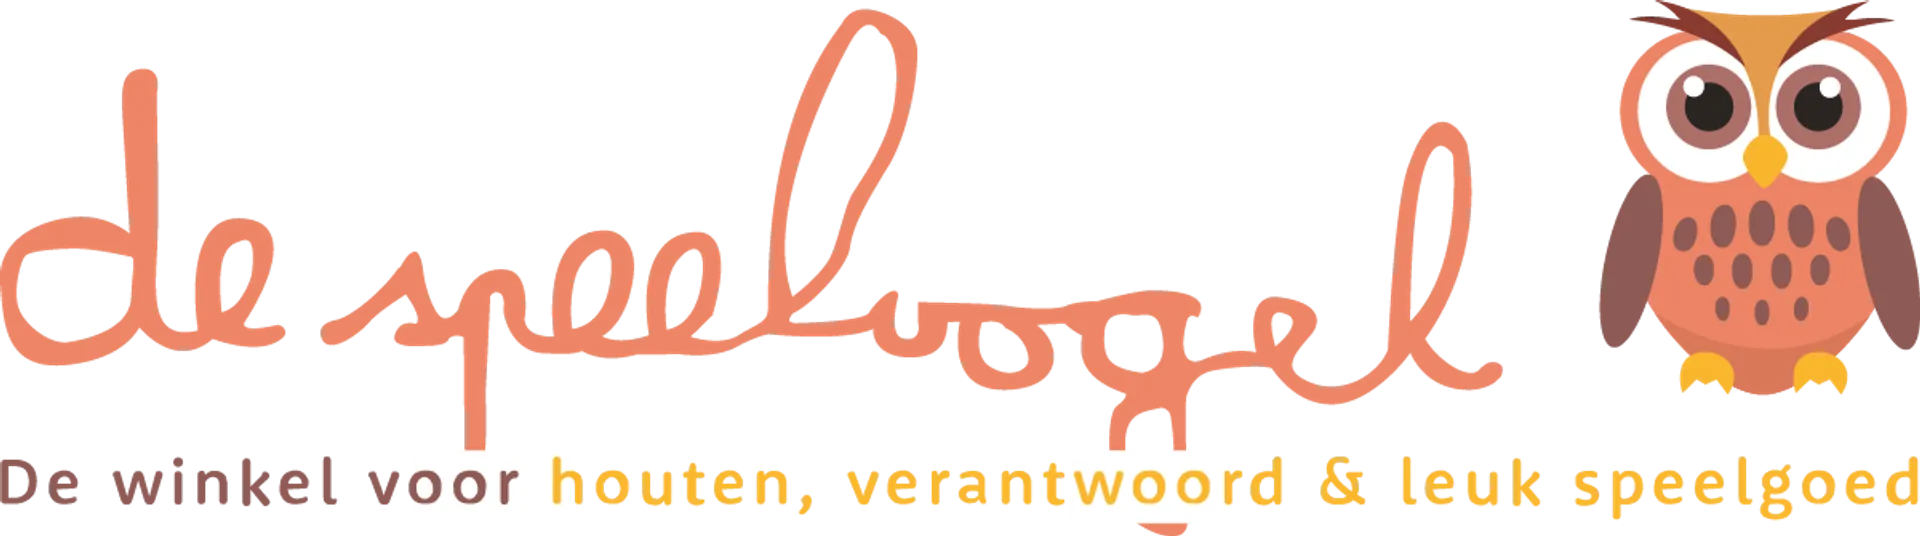 DE SPEELVOGEL logo